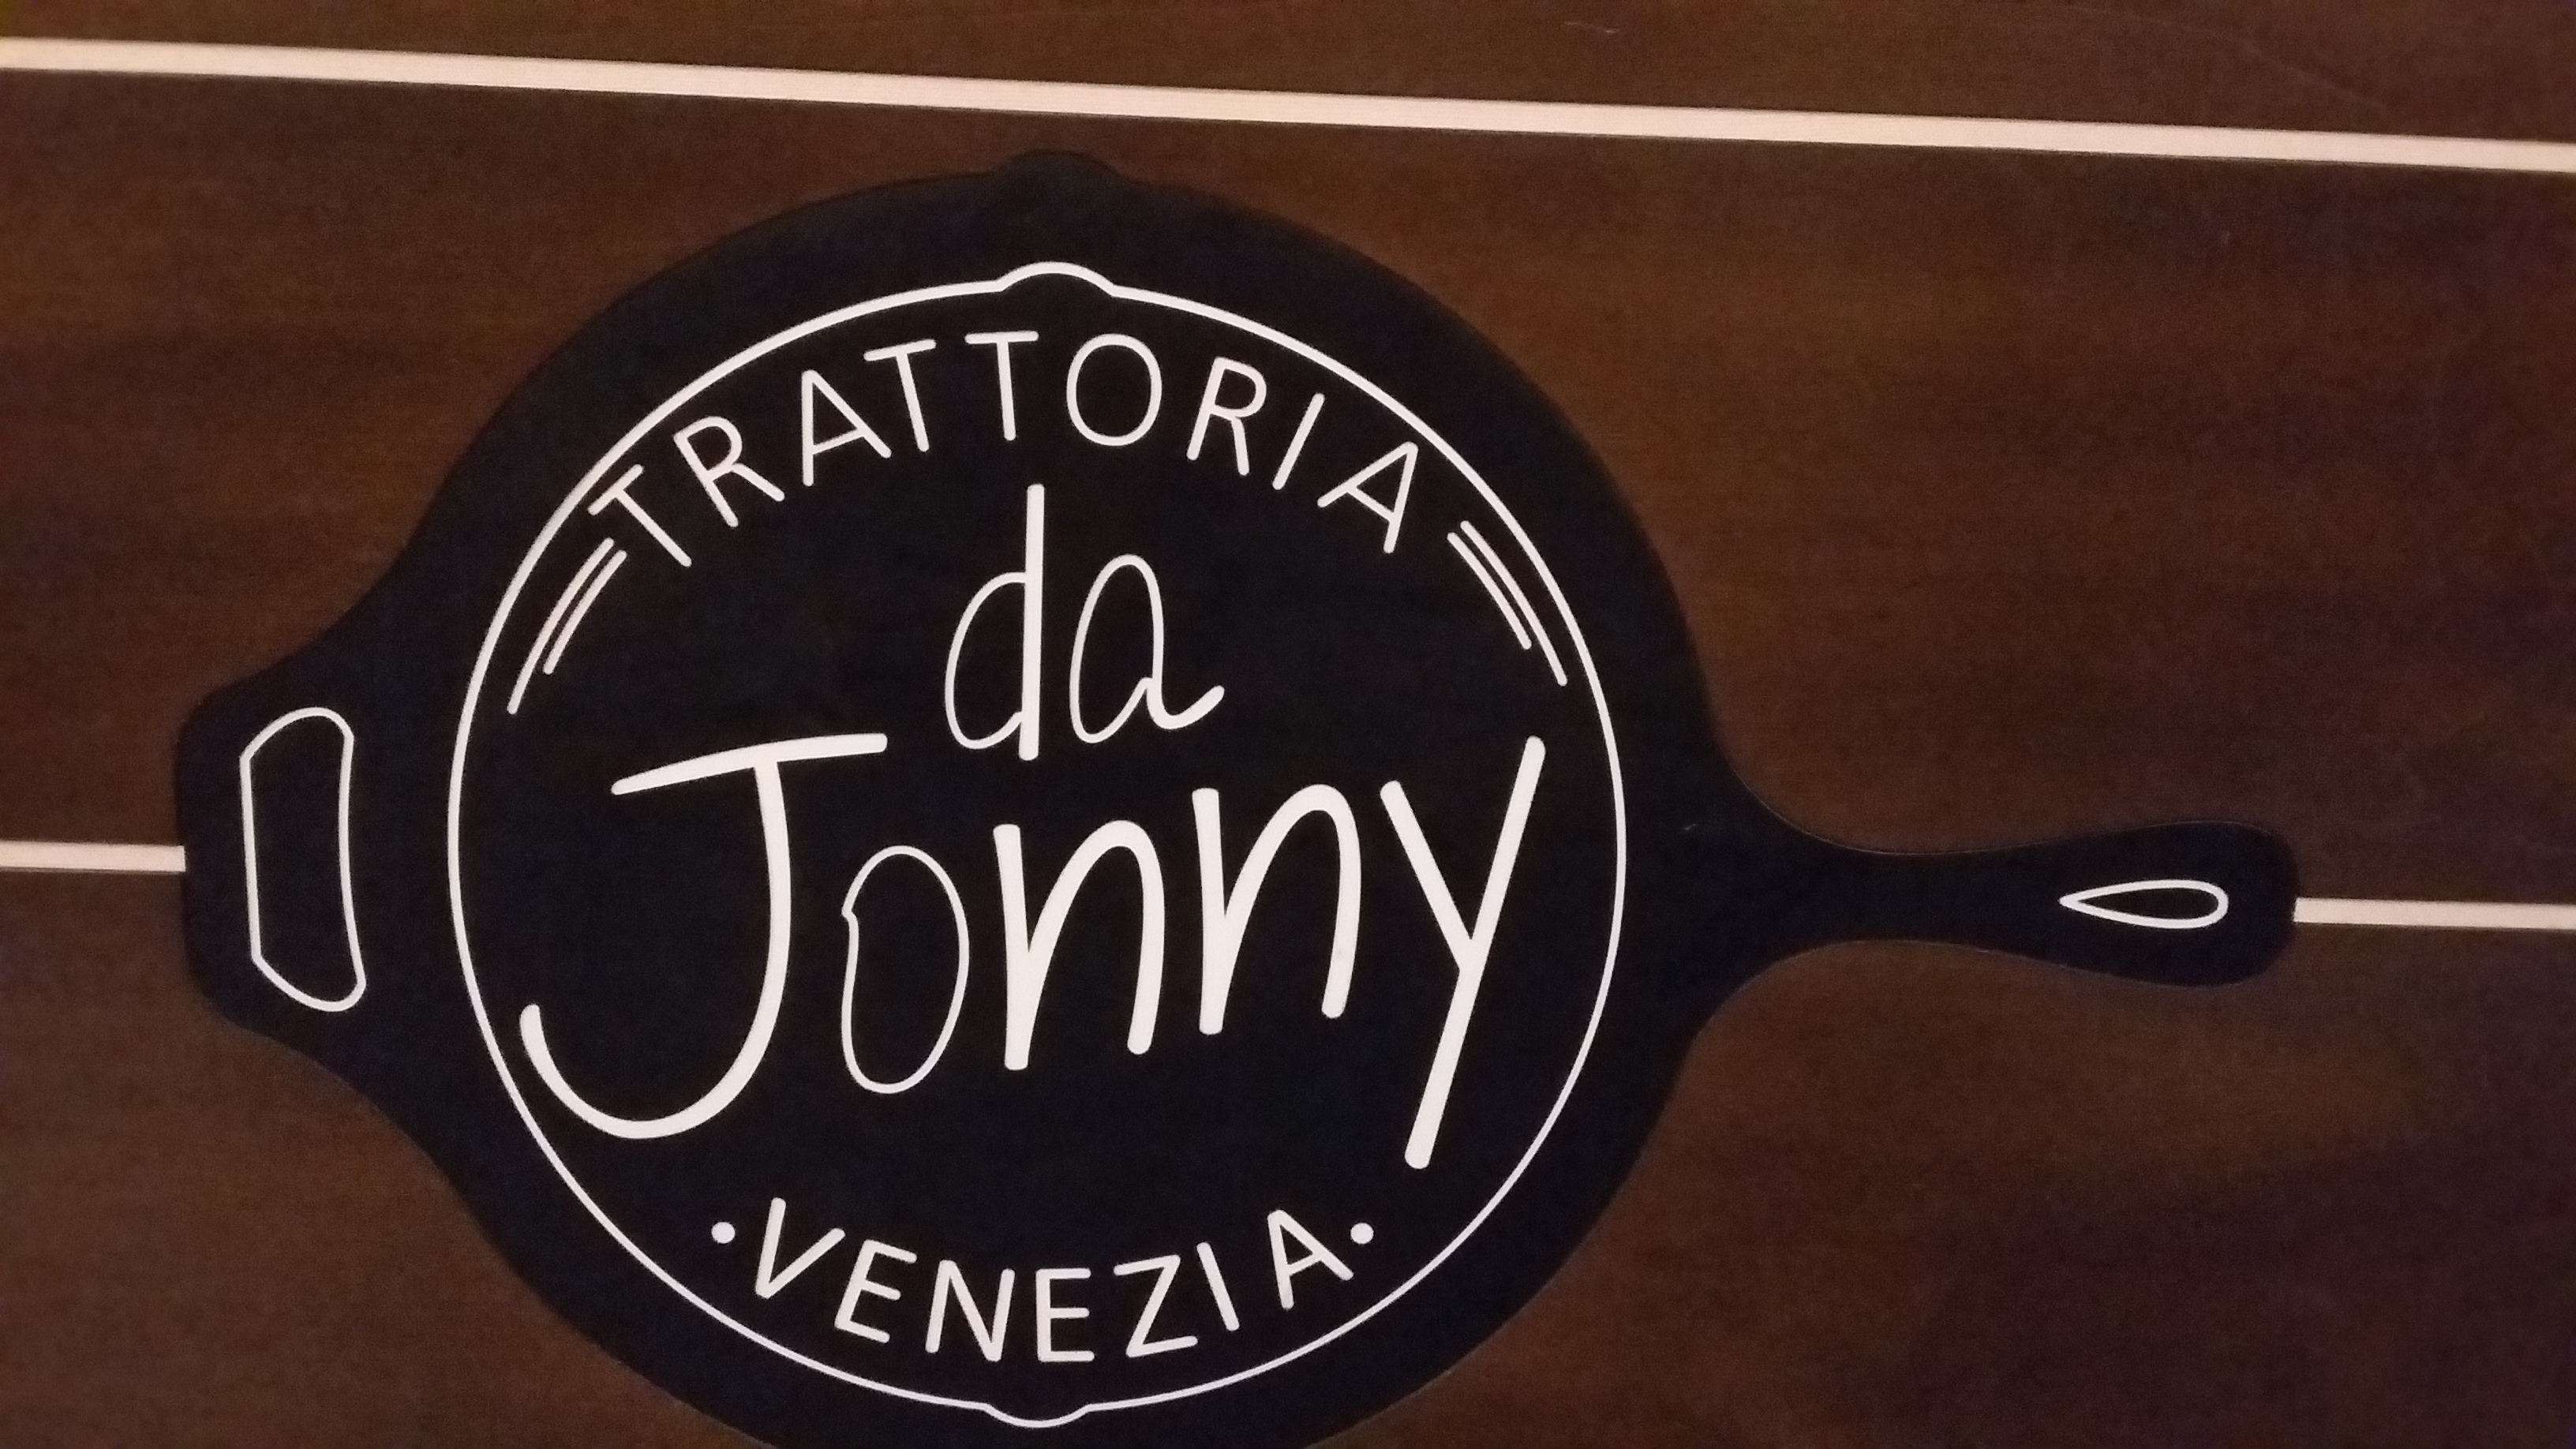 Trattoria d Jonny 2 - Restaurant